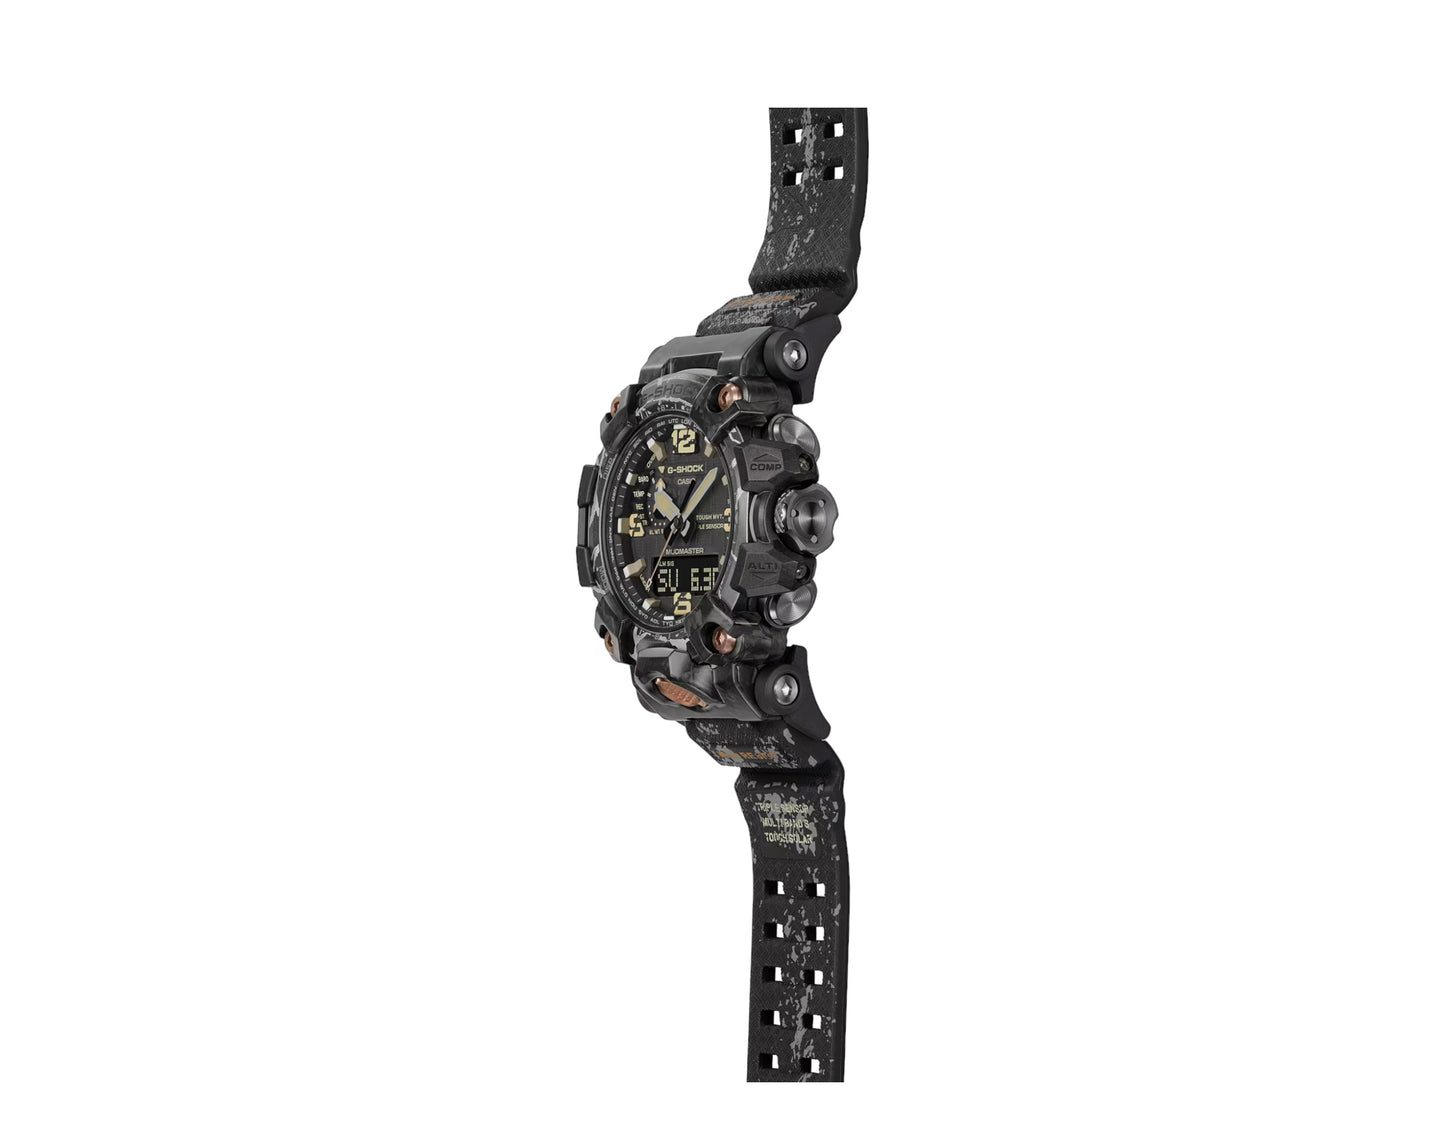 Casio G-Shock GWG2000CR "Cracked" MudMaster Analog-Digital Resin Men's Watch